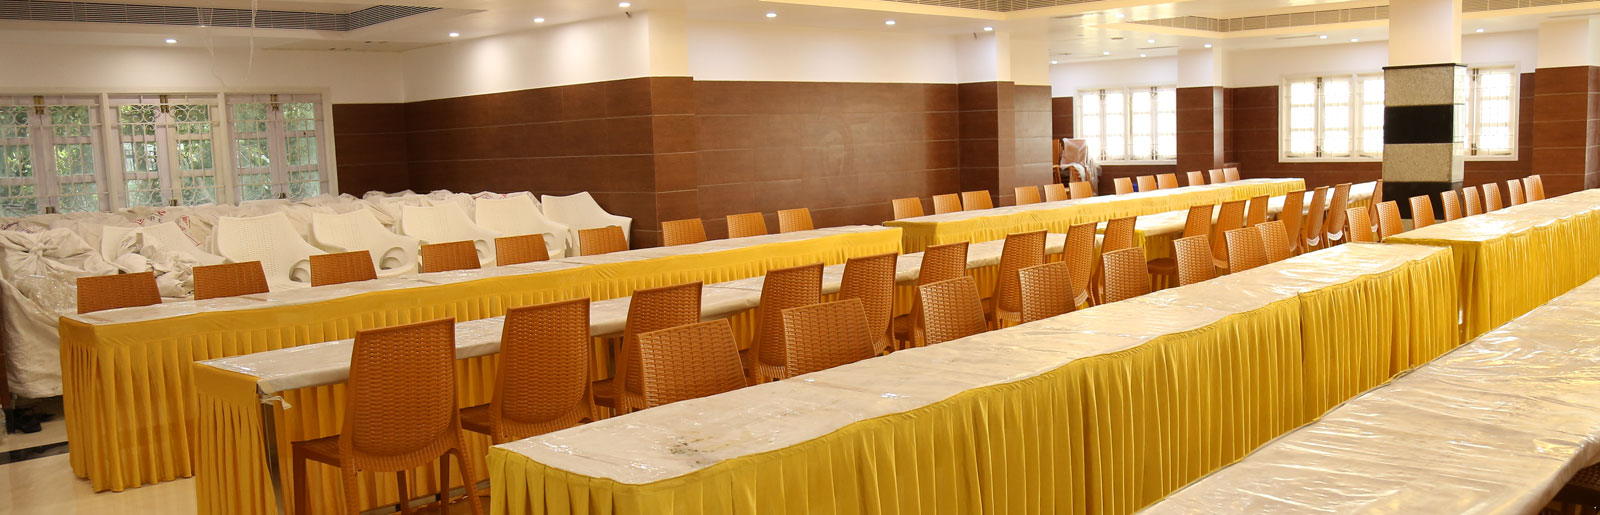 Large-Dining-Hall-Facility-Kalyana-Mandapam-Medavakkam